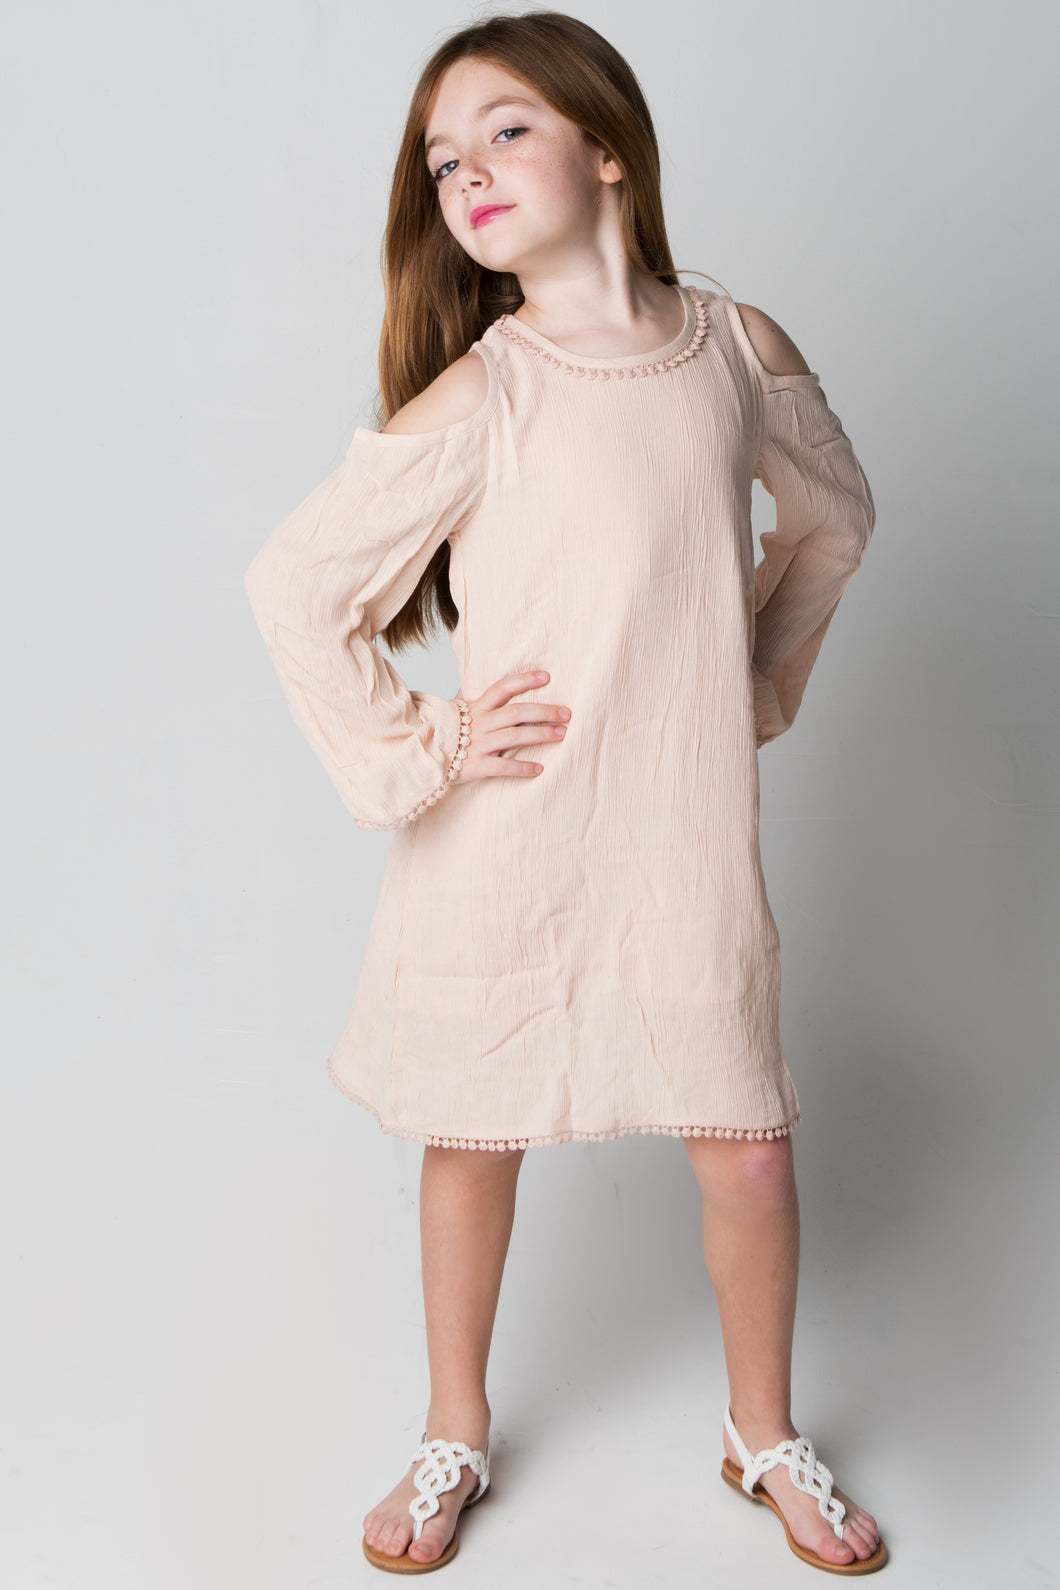 Blush Lace Detail Cold-Shoulder Dress - Kids Wholesale Boutique Clothing, Dress - Girls Dresses, Yo Baby Wholesale - Yo Baby